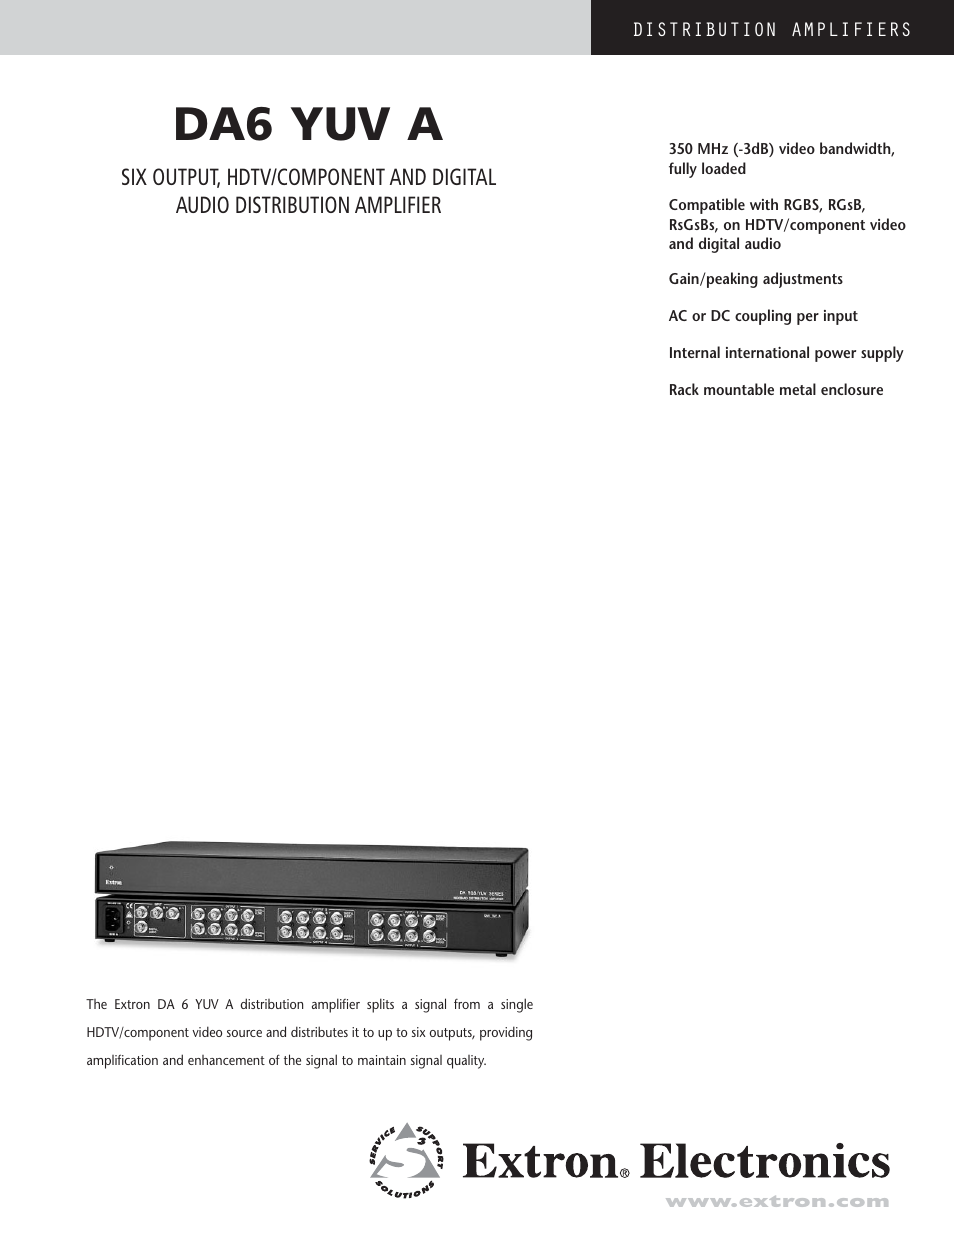 Extron electronic Extron DA6 YUV A User Manual | 2 pages